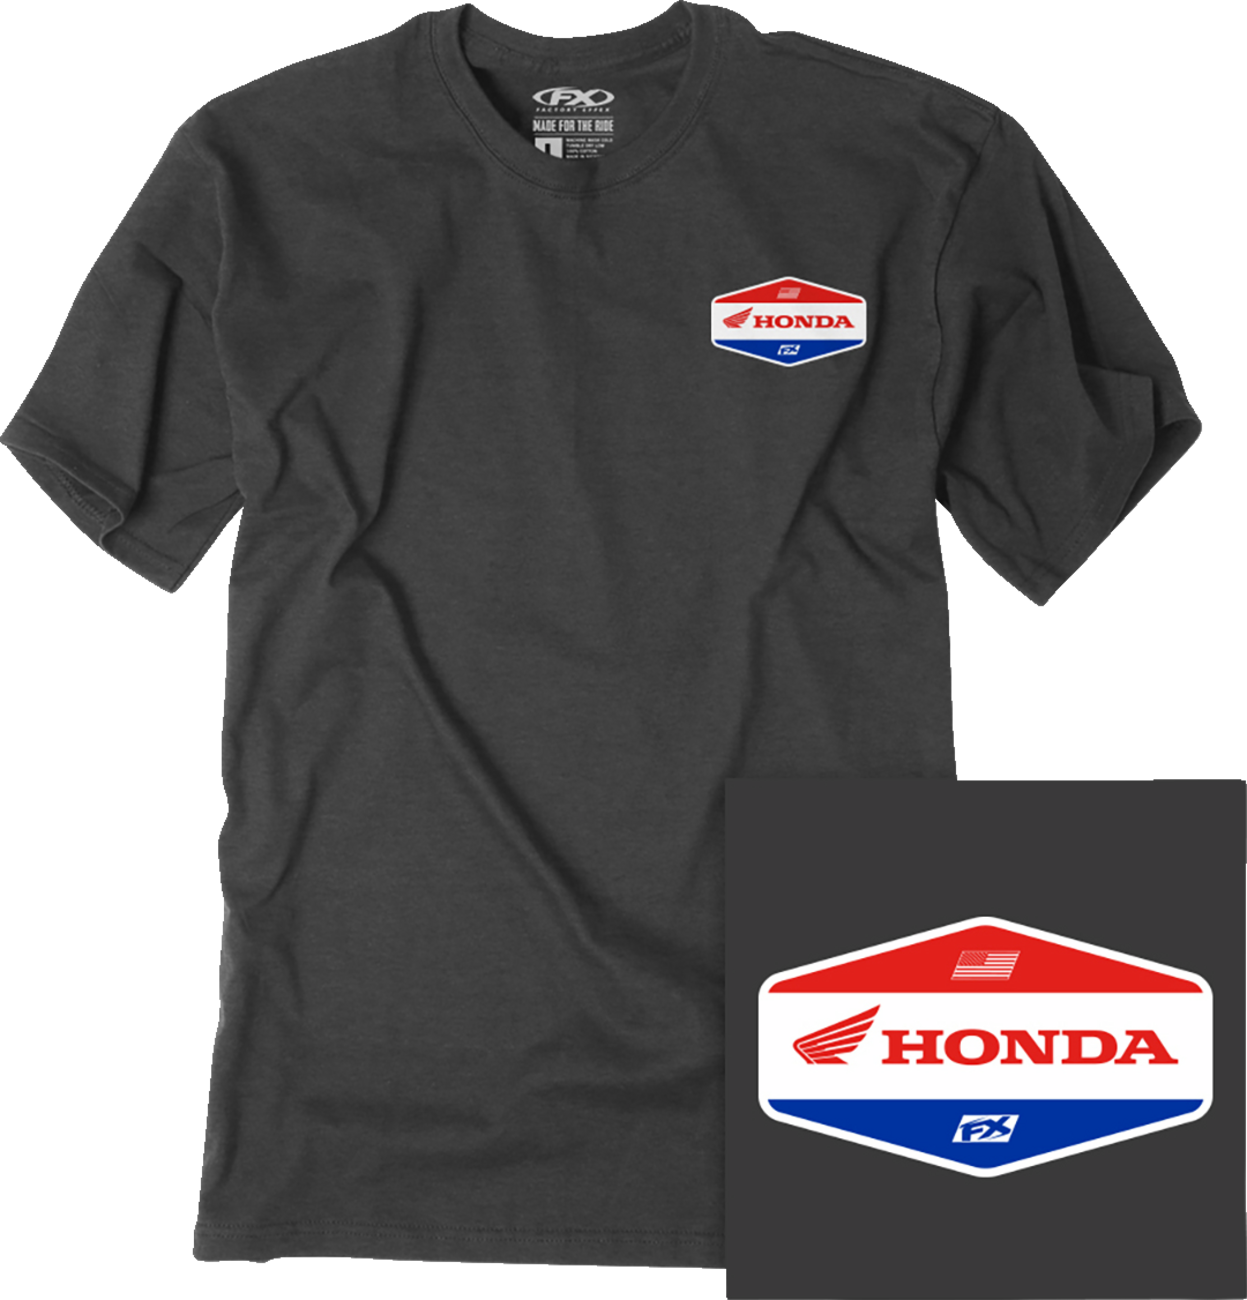 FACTORY EFFEX Honda Stadium T-Shirt - Heather Charcoal - Large 27-87334